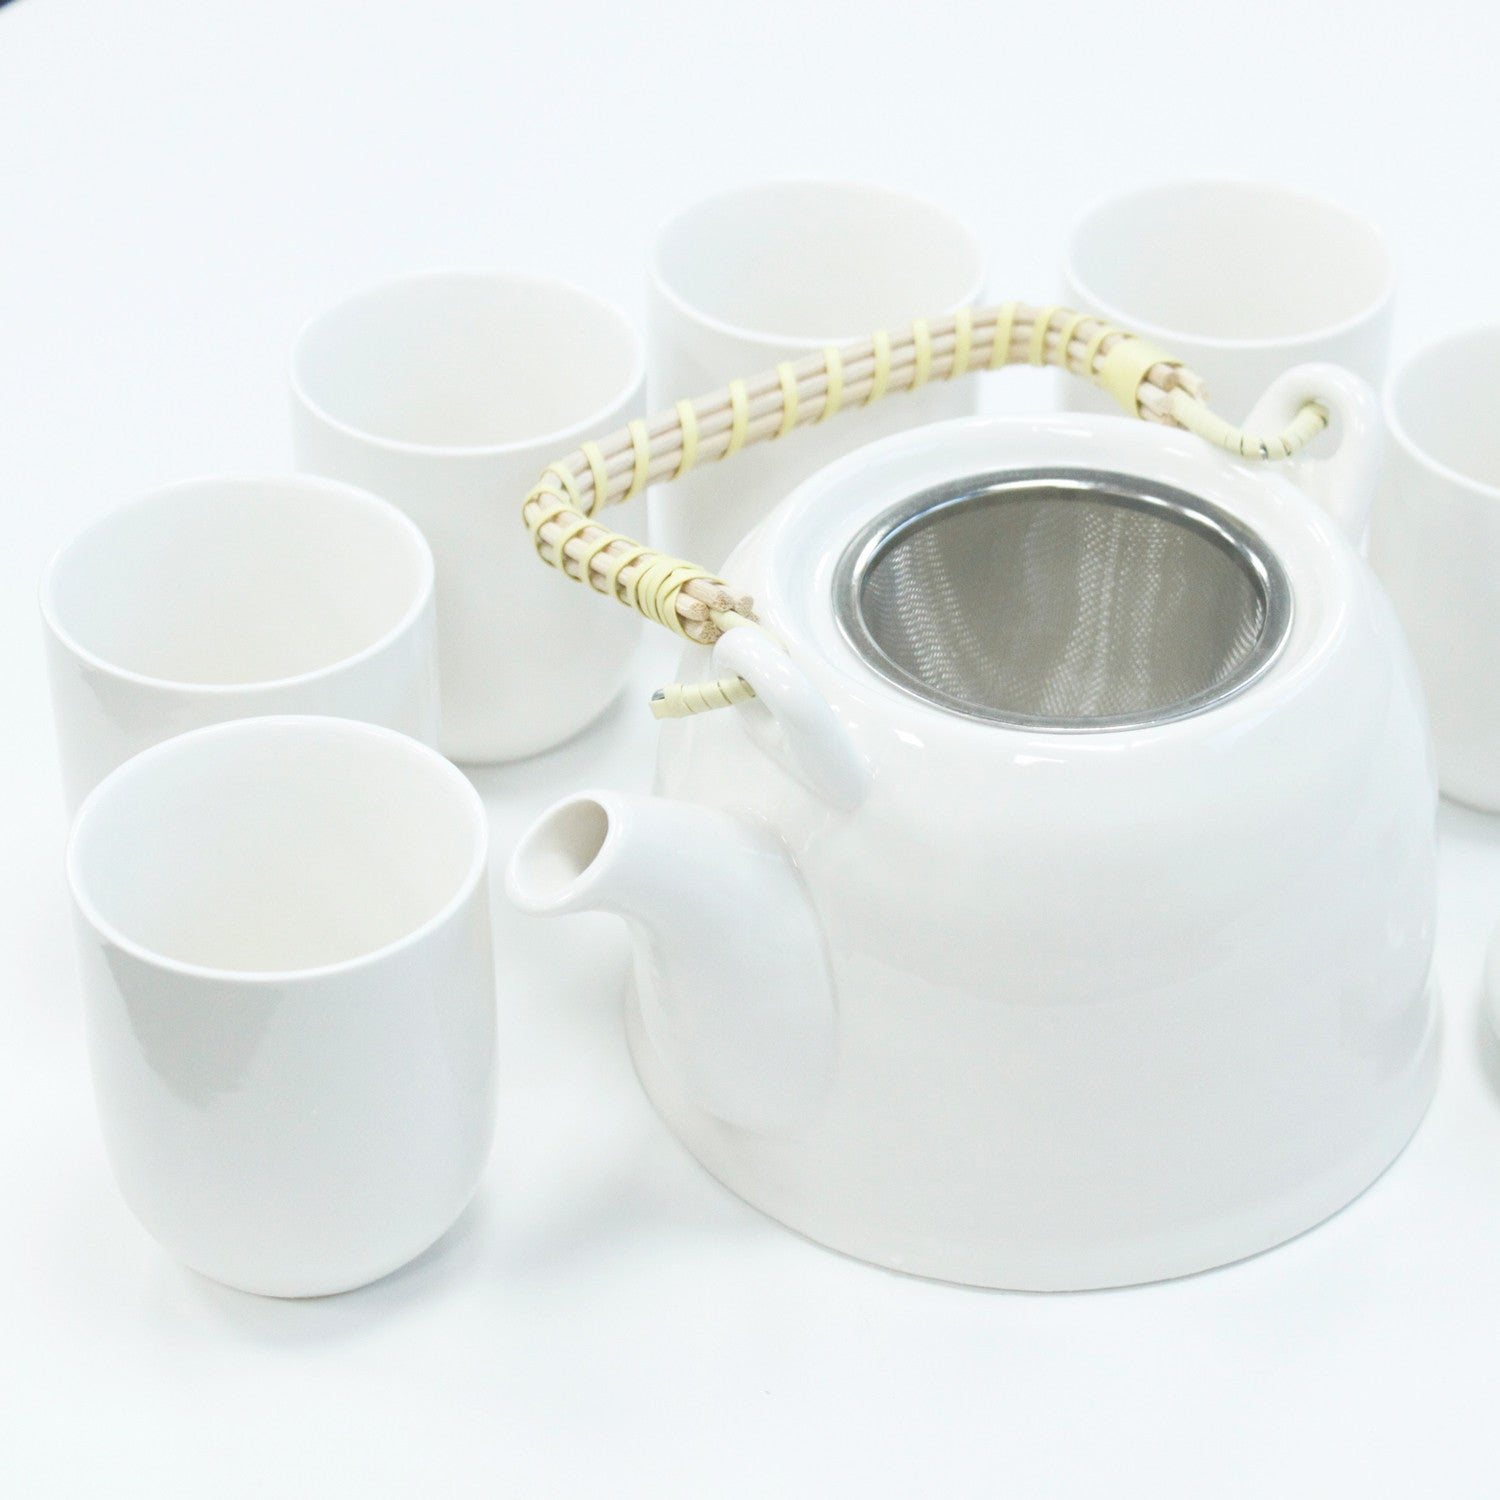 Herbal Teapot Set - Classic White - £37.0 - 